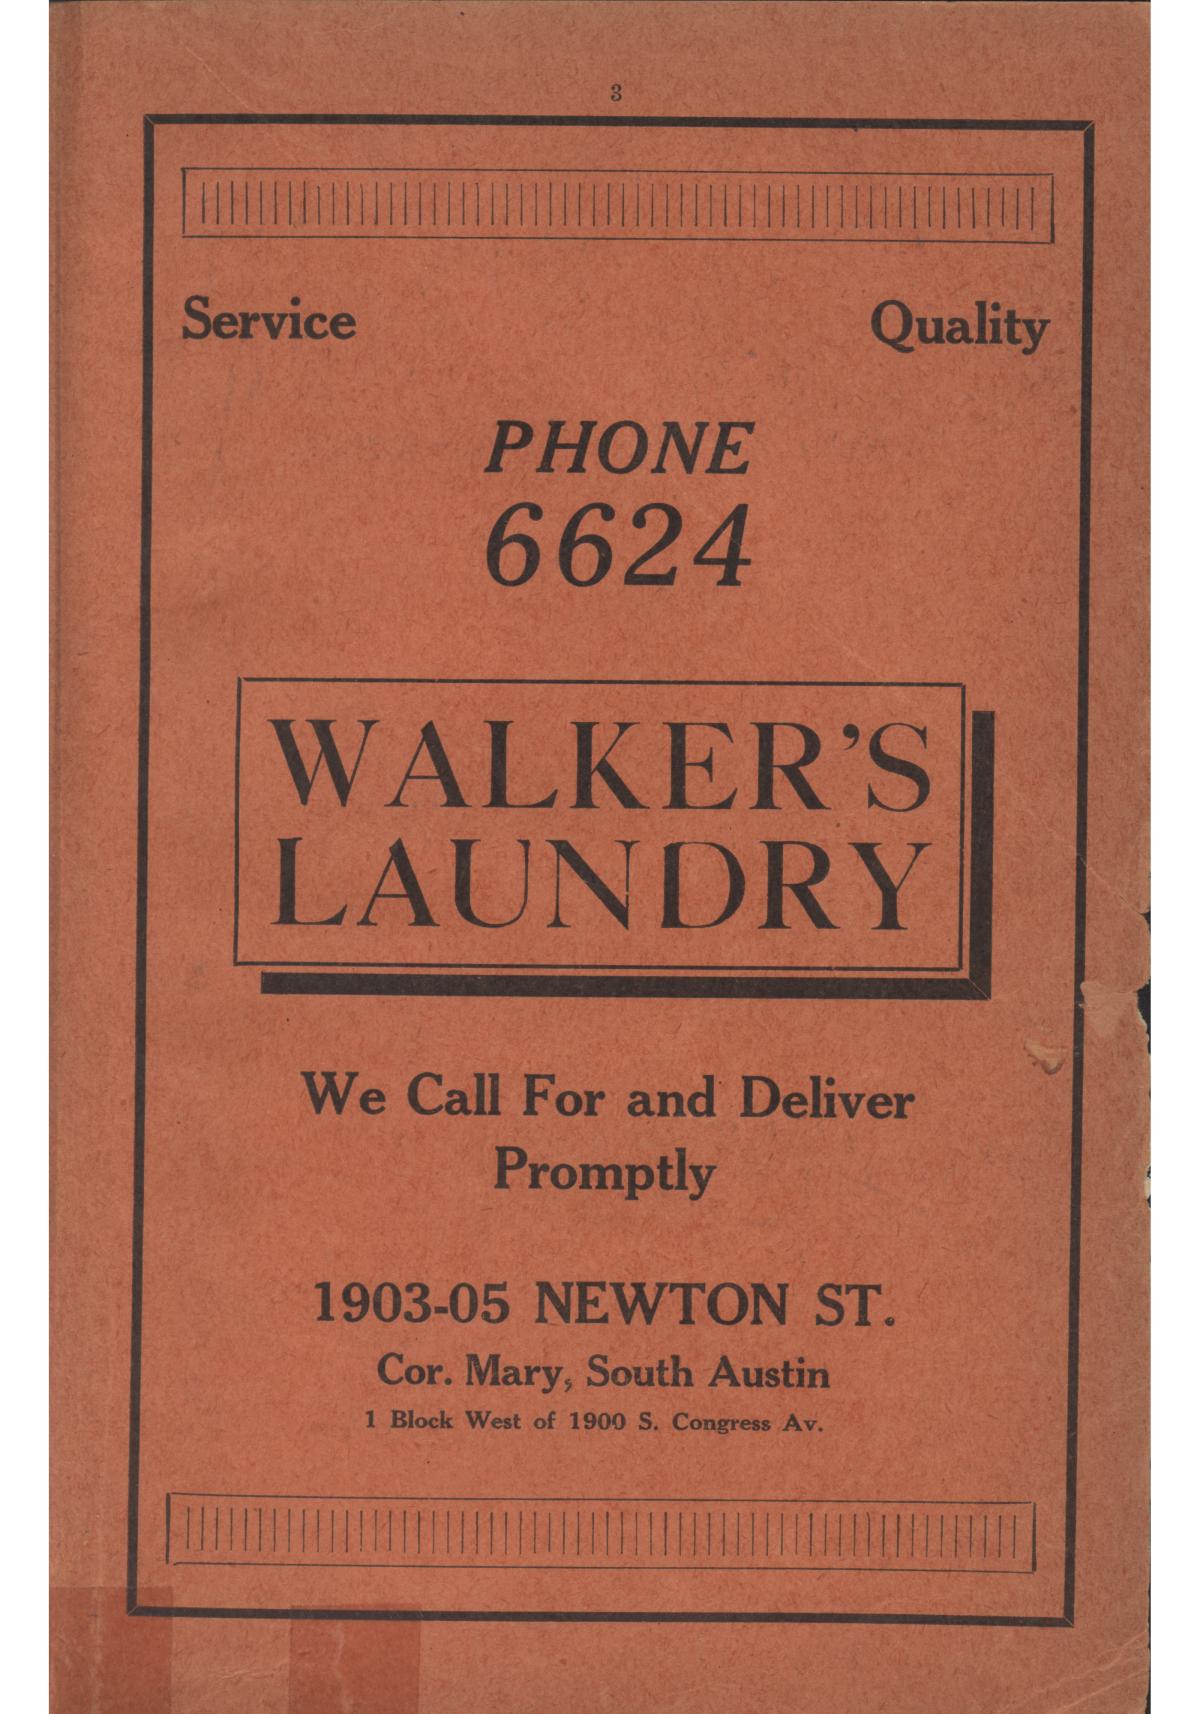 Polk's Morrison & Fourmy Austin City Directory, 1922
                                                
                                                    3
                                                